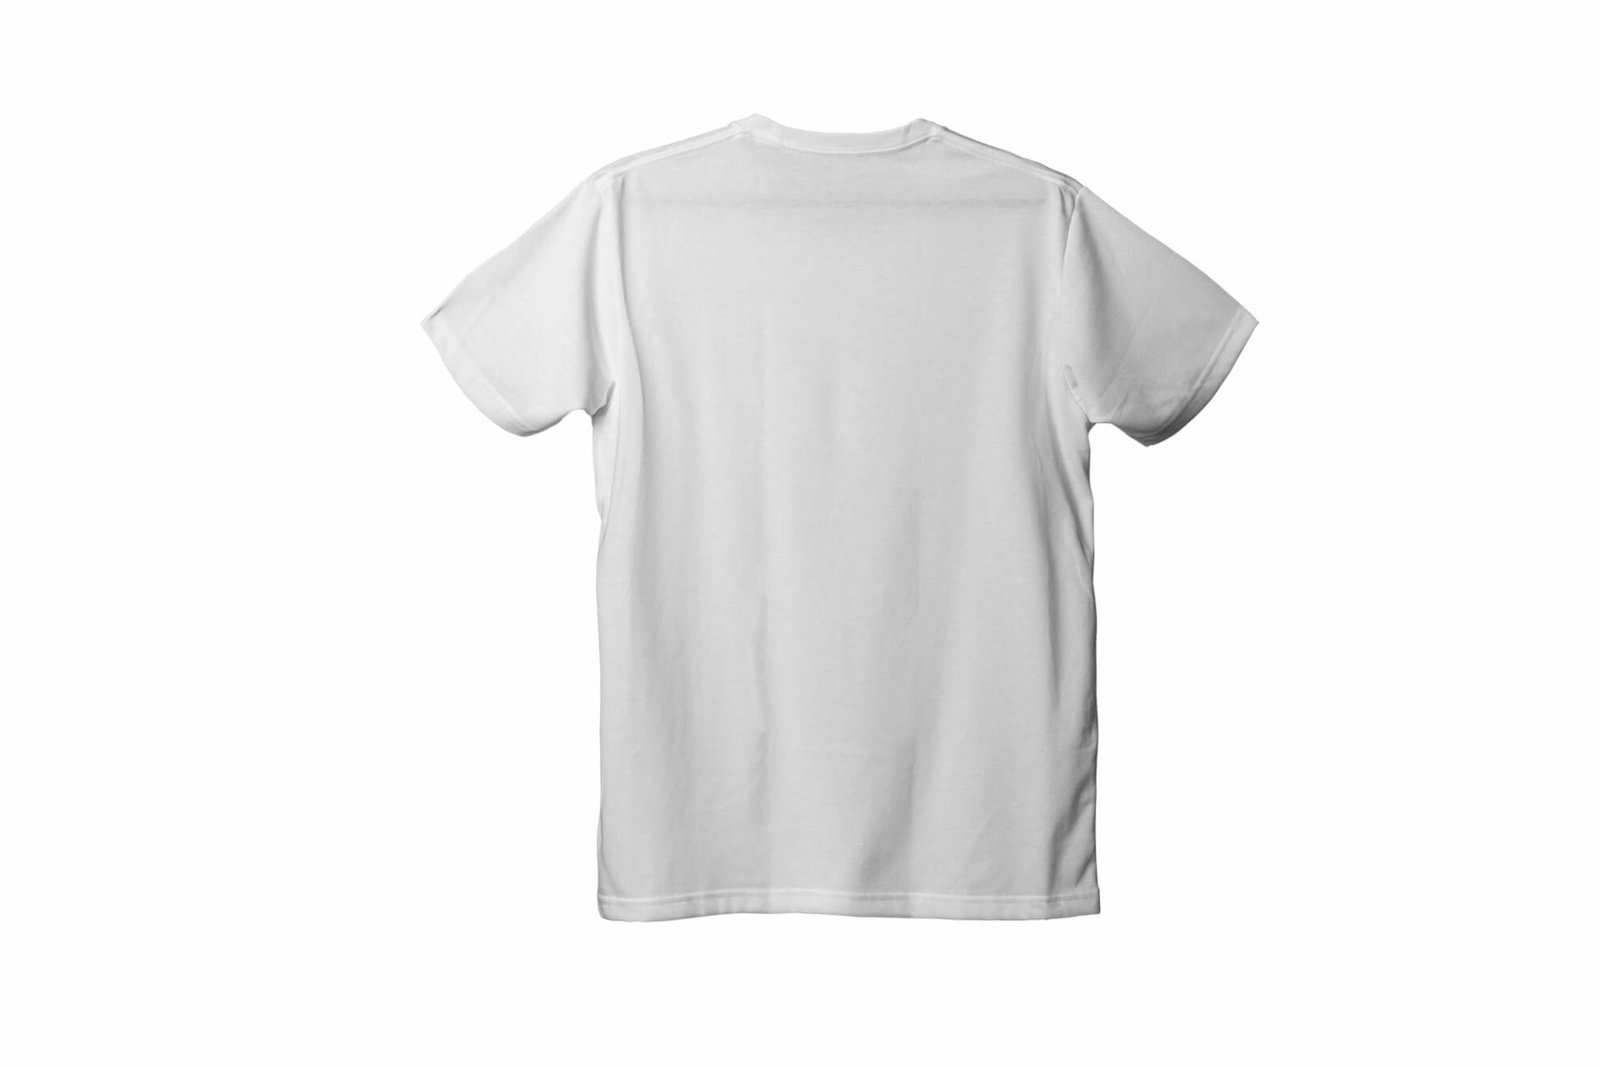 Free T Shirt Back Mockup PSD Template - Mockup Den